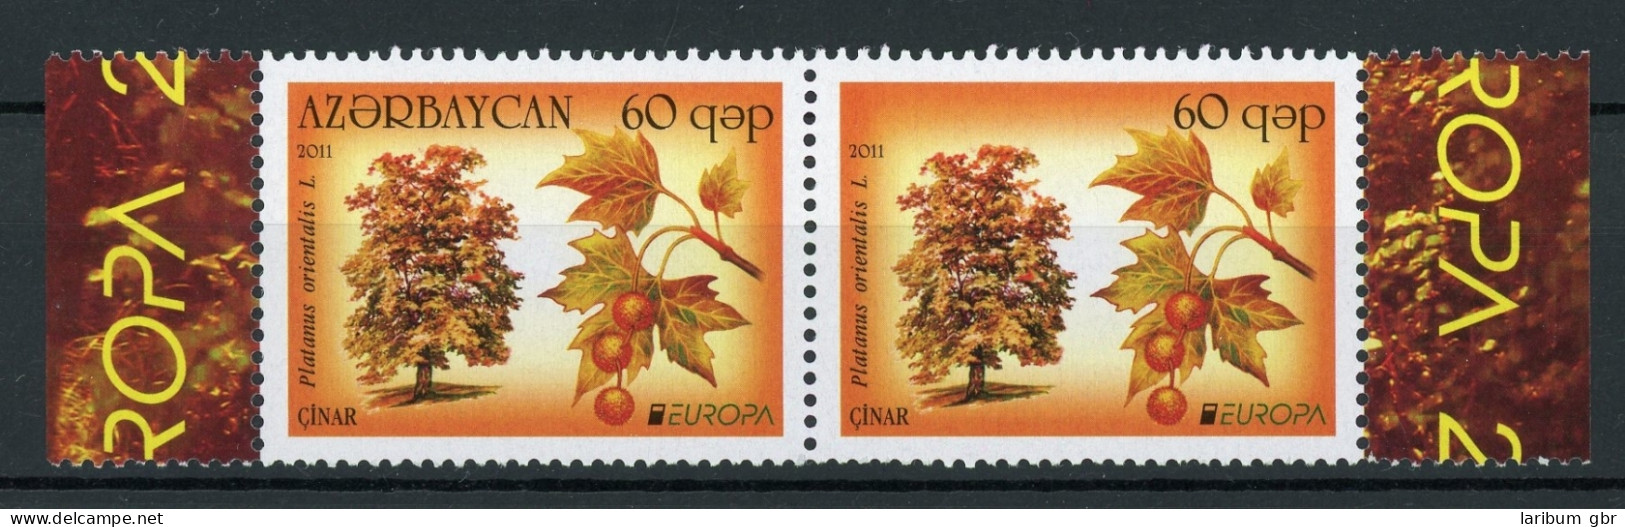 Aserbaidschan 841 I Postfrisch Fehlender Landesname, CEPT #HE030 - Aserbaidschan